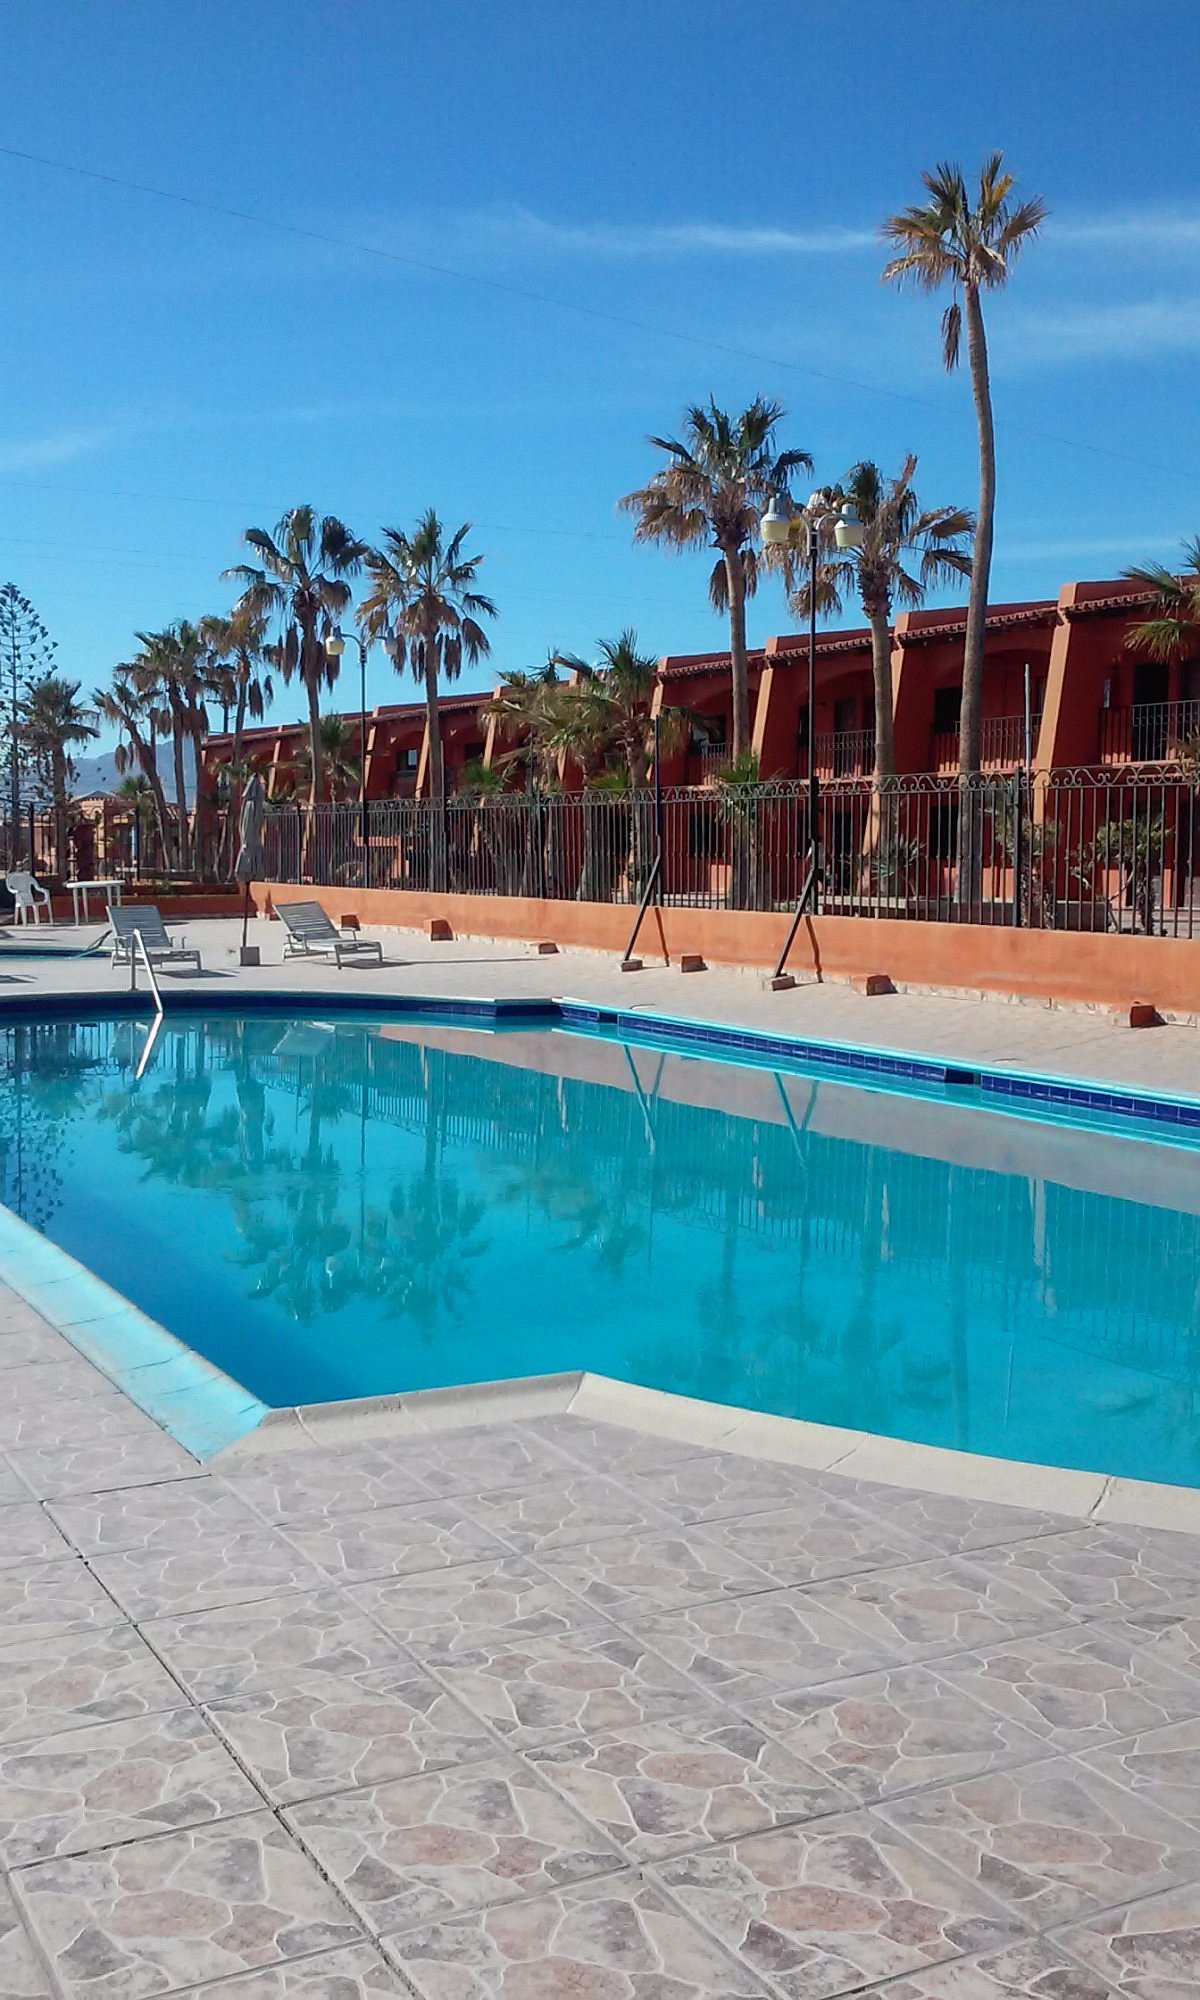 Hotel El Cortez Pool: Pictures Reviews Tripadvisor